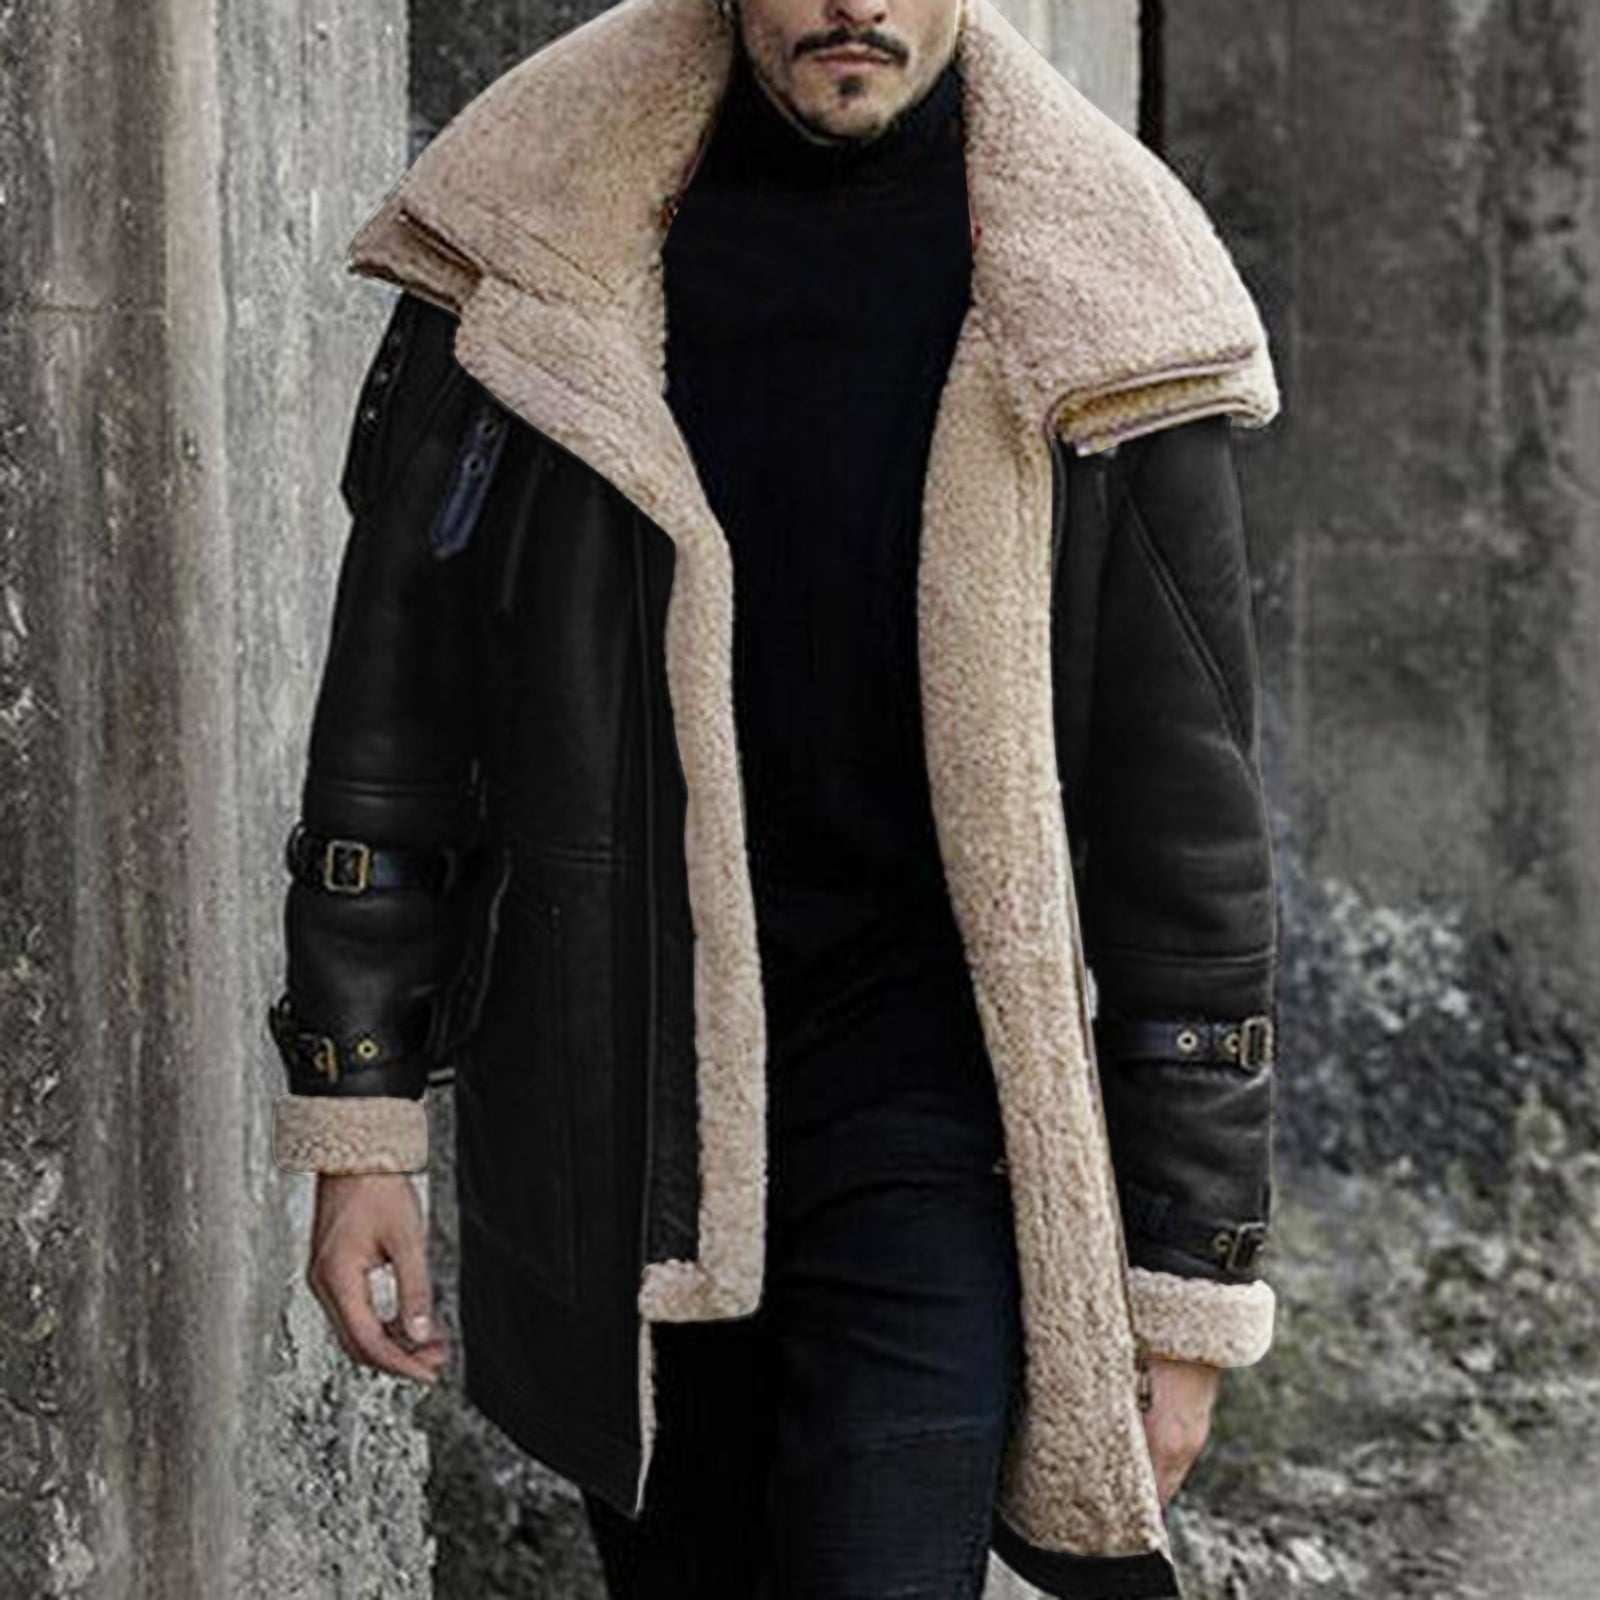 HSMQHJWE Quarter Zip Men Coat Thicken Jacket Coat Coat Sheepskin Winter Vintage Men For Collar Jacket Lapel Plus Size Leather Outer Padded Jackets Men Long Sleeve Outwear